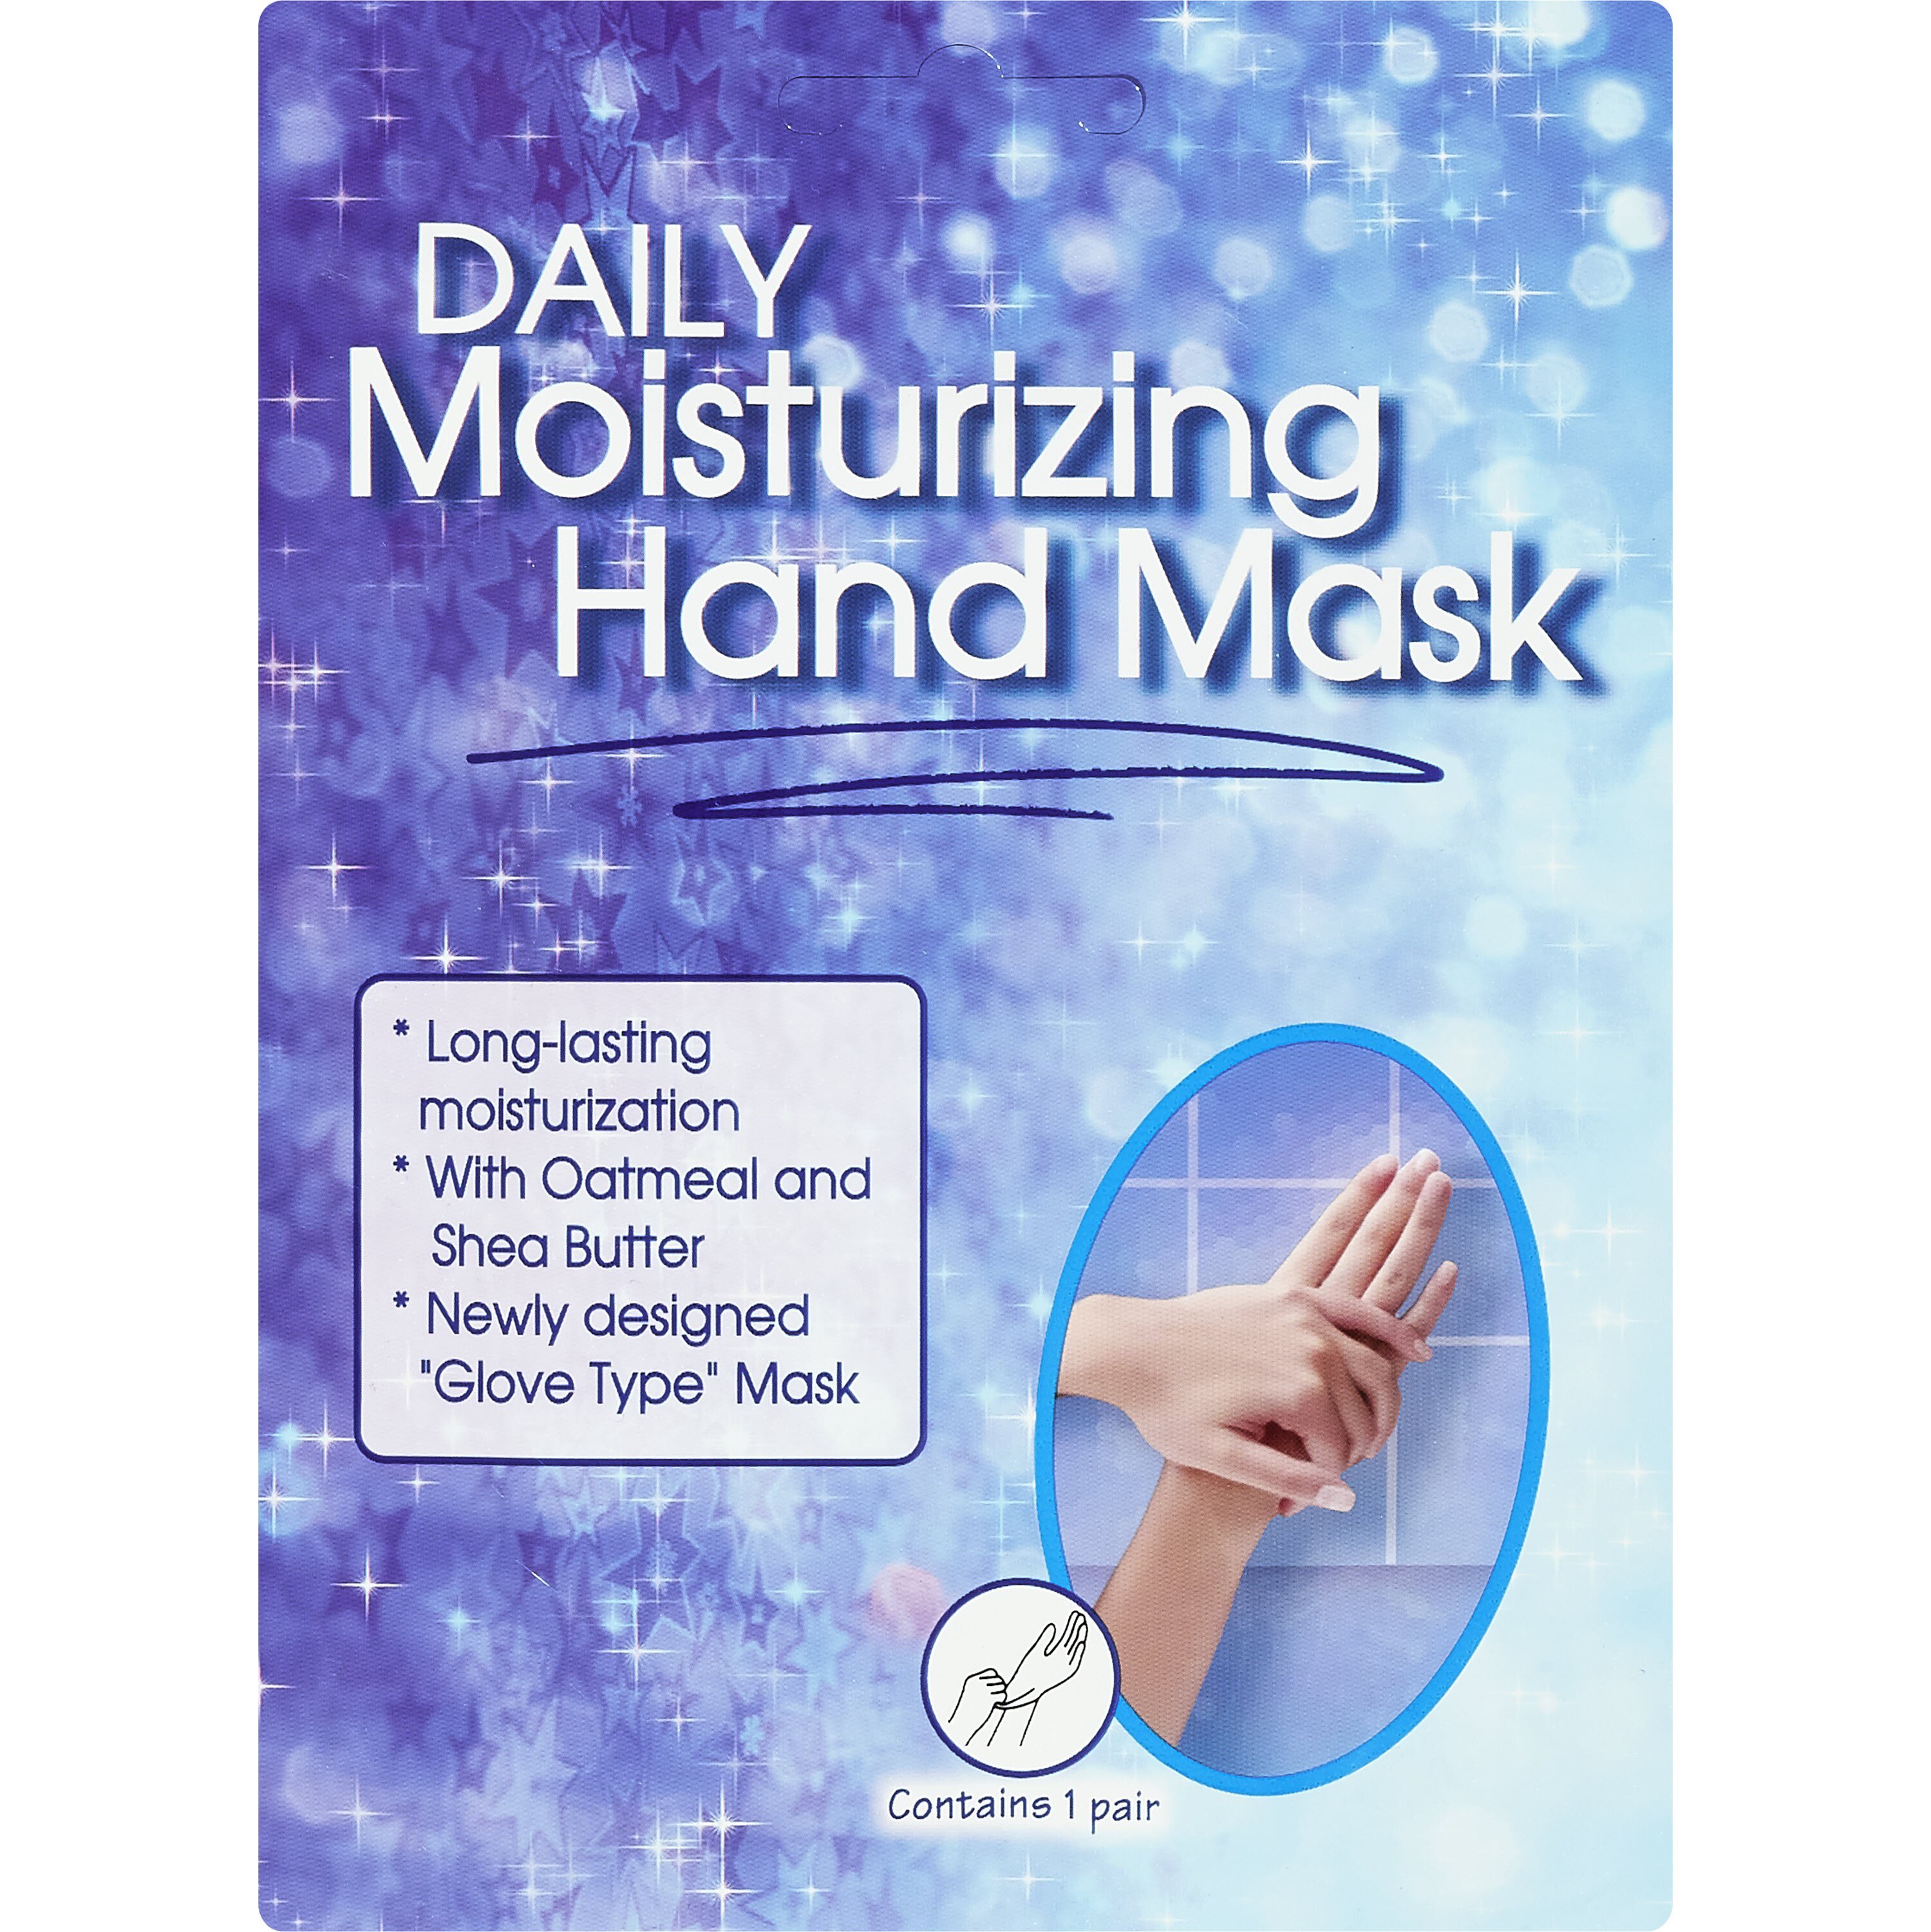 Daily Moisturizing Hand Mask